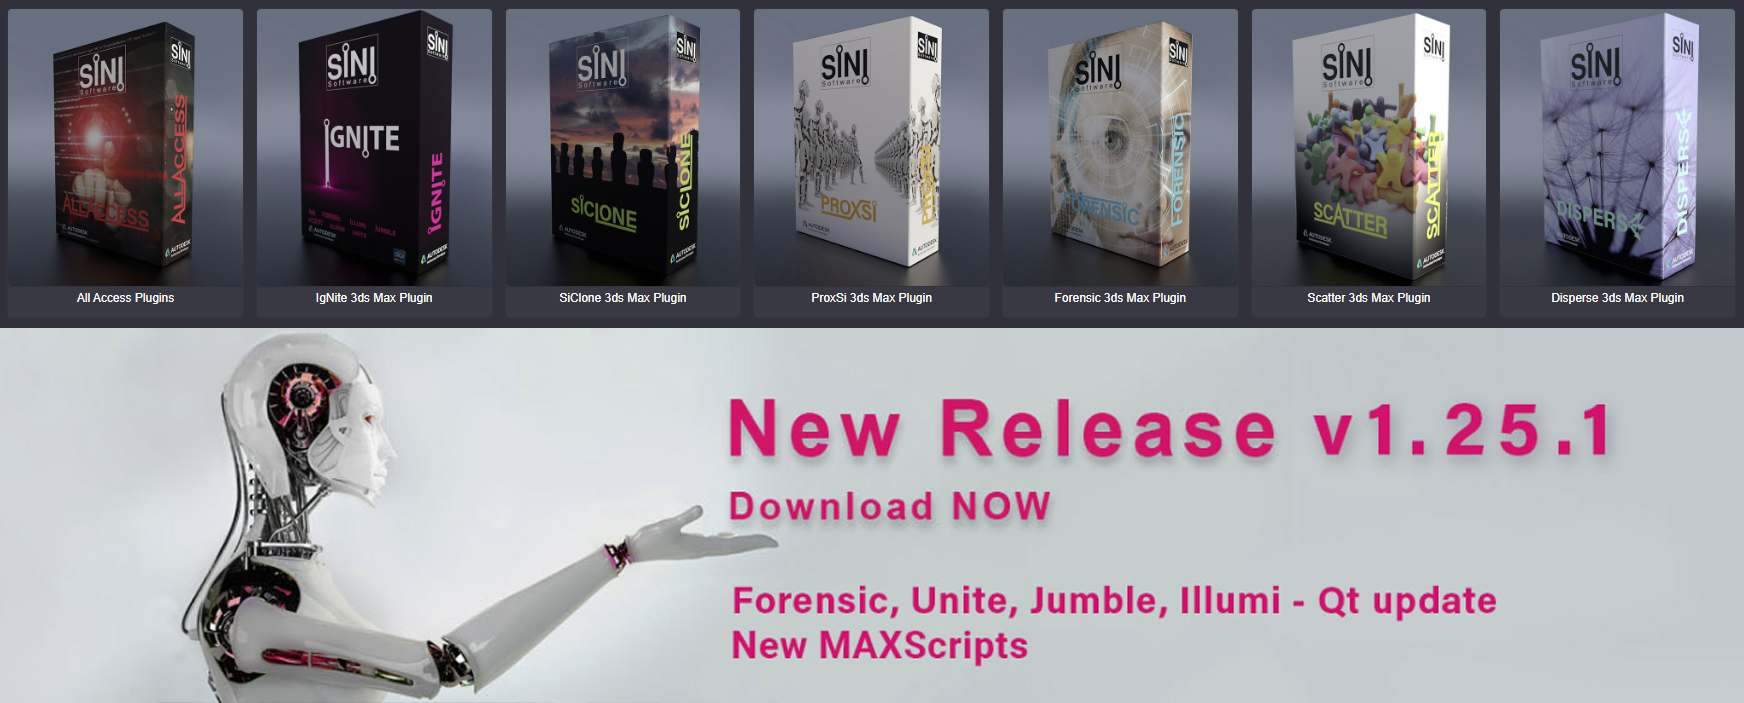 SiNi Software Plugin V 1.25.1 for 3ds Max 2018, 2021, 2022, 2023